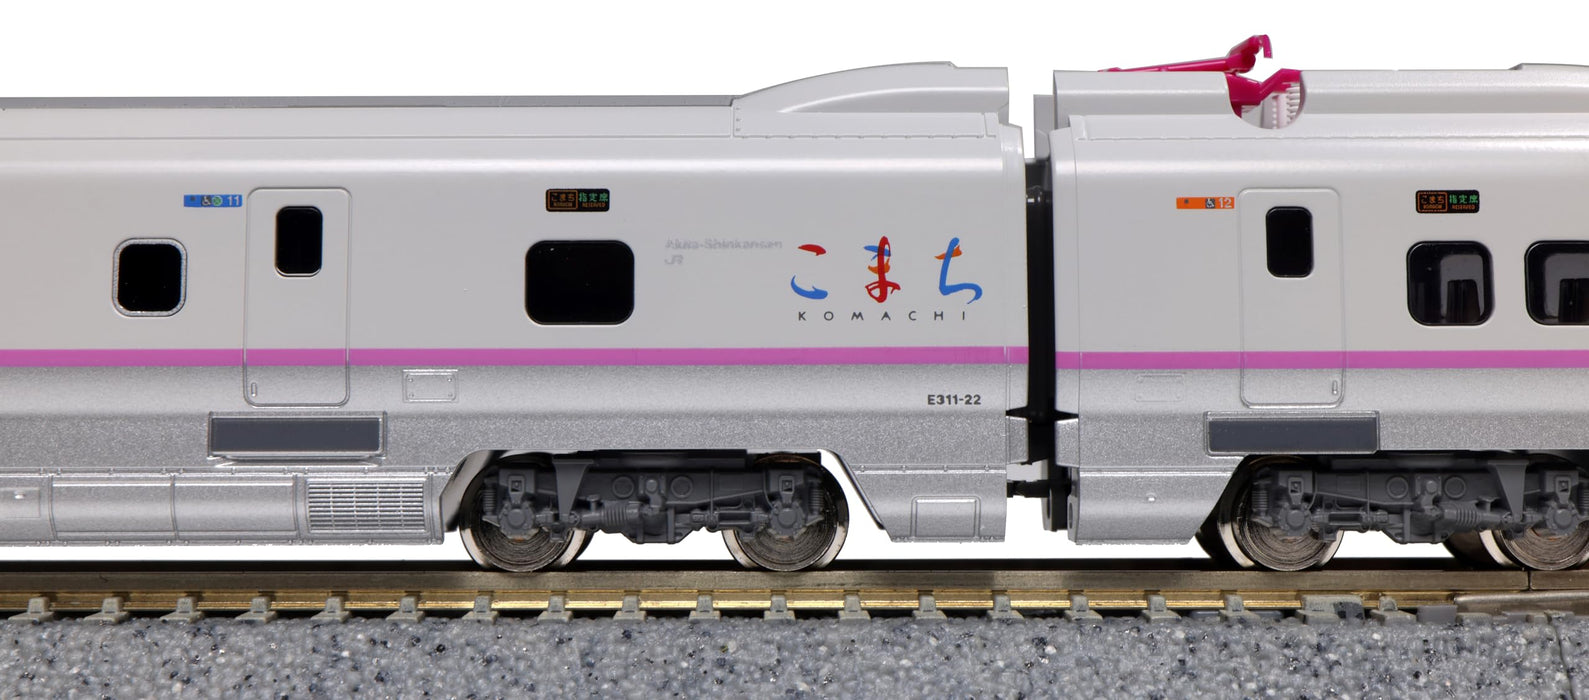 Kato E3 Series Akita Shinkansen Komachi N Gauge 6 Car 10-221 Red Railway Model Train